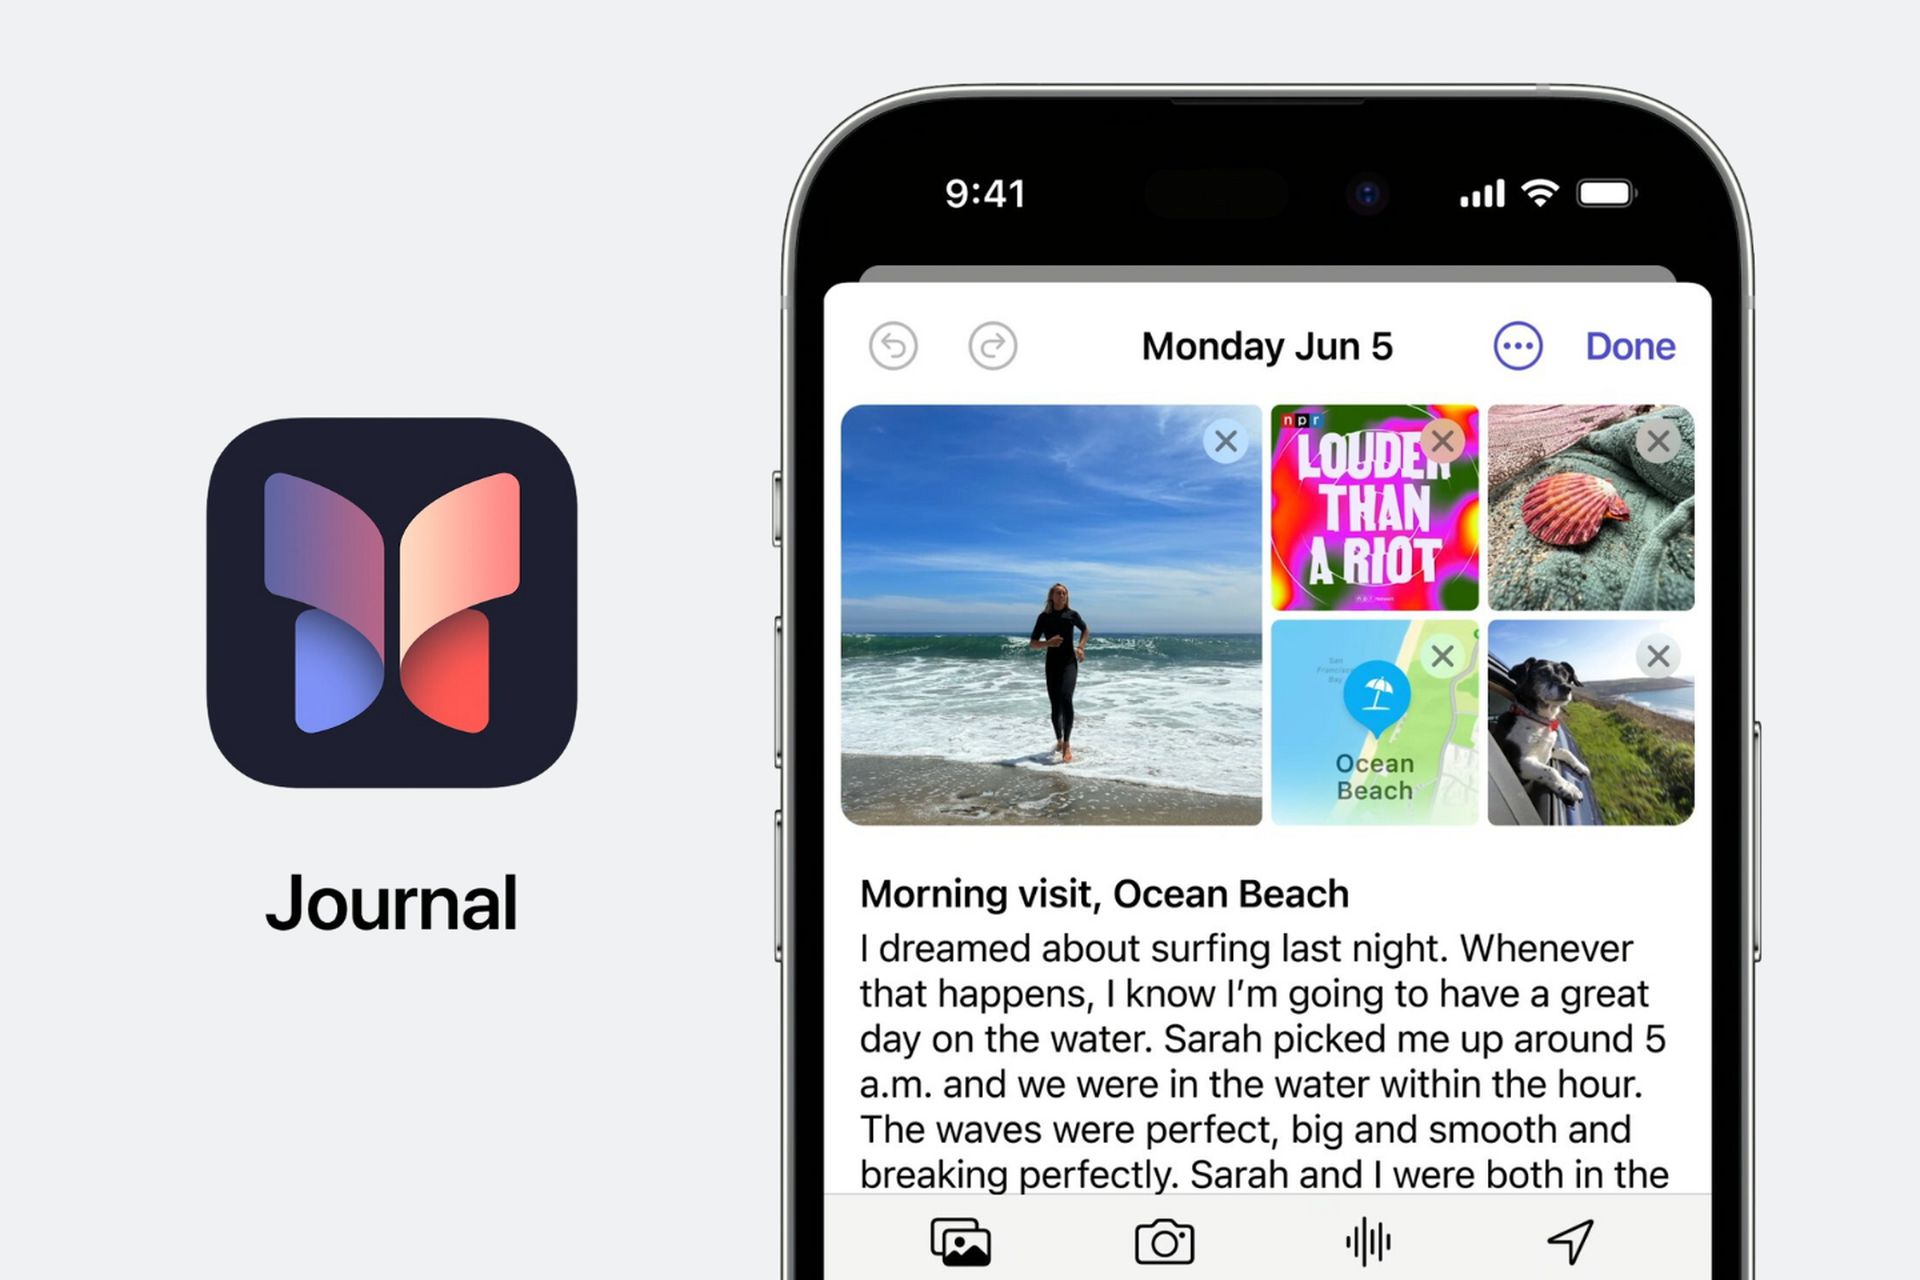 iphone journal app on mac